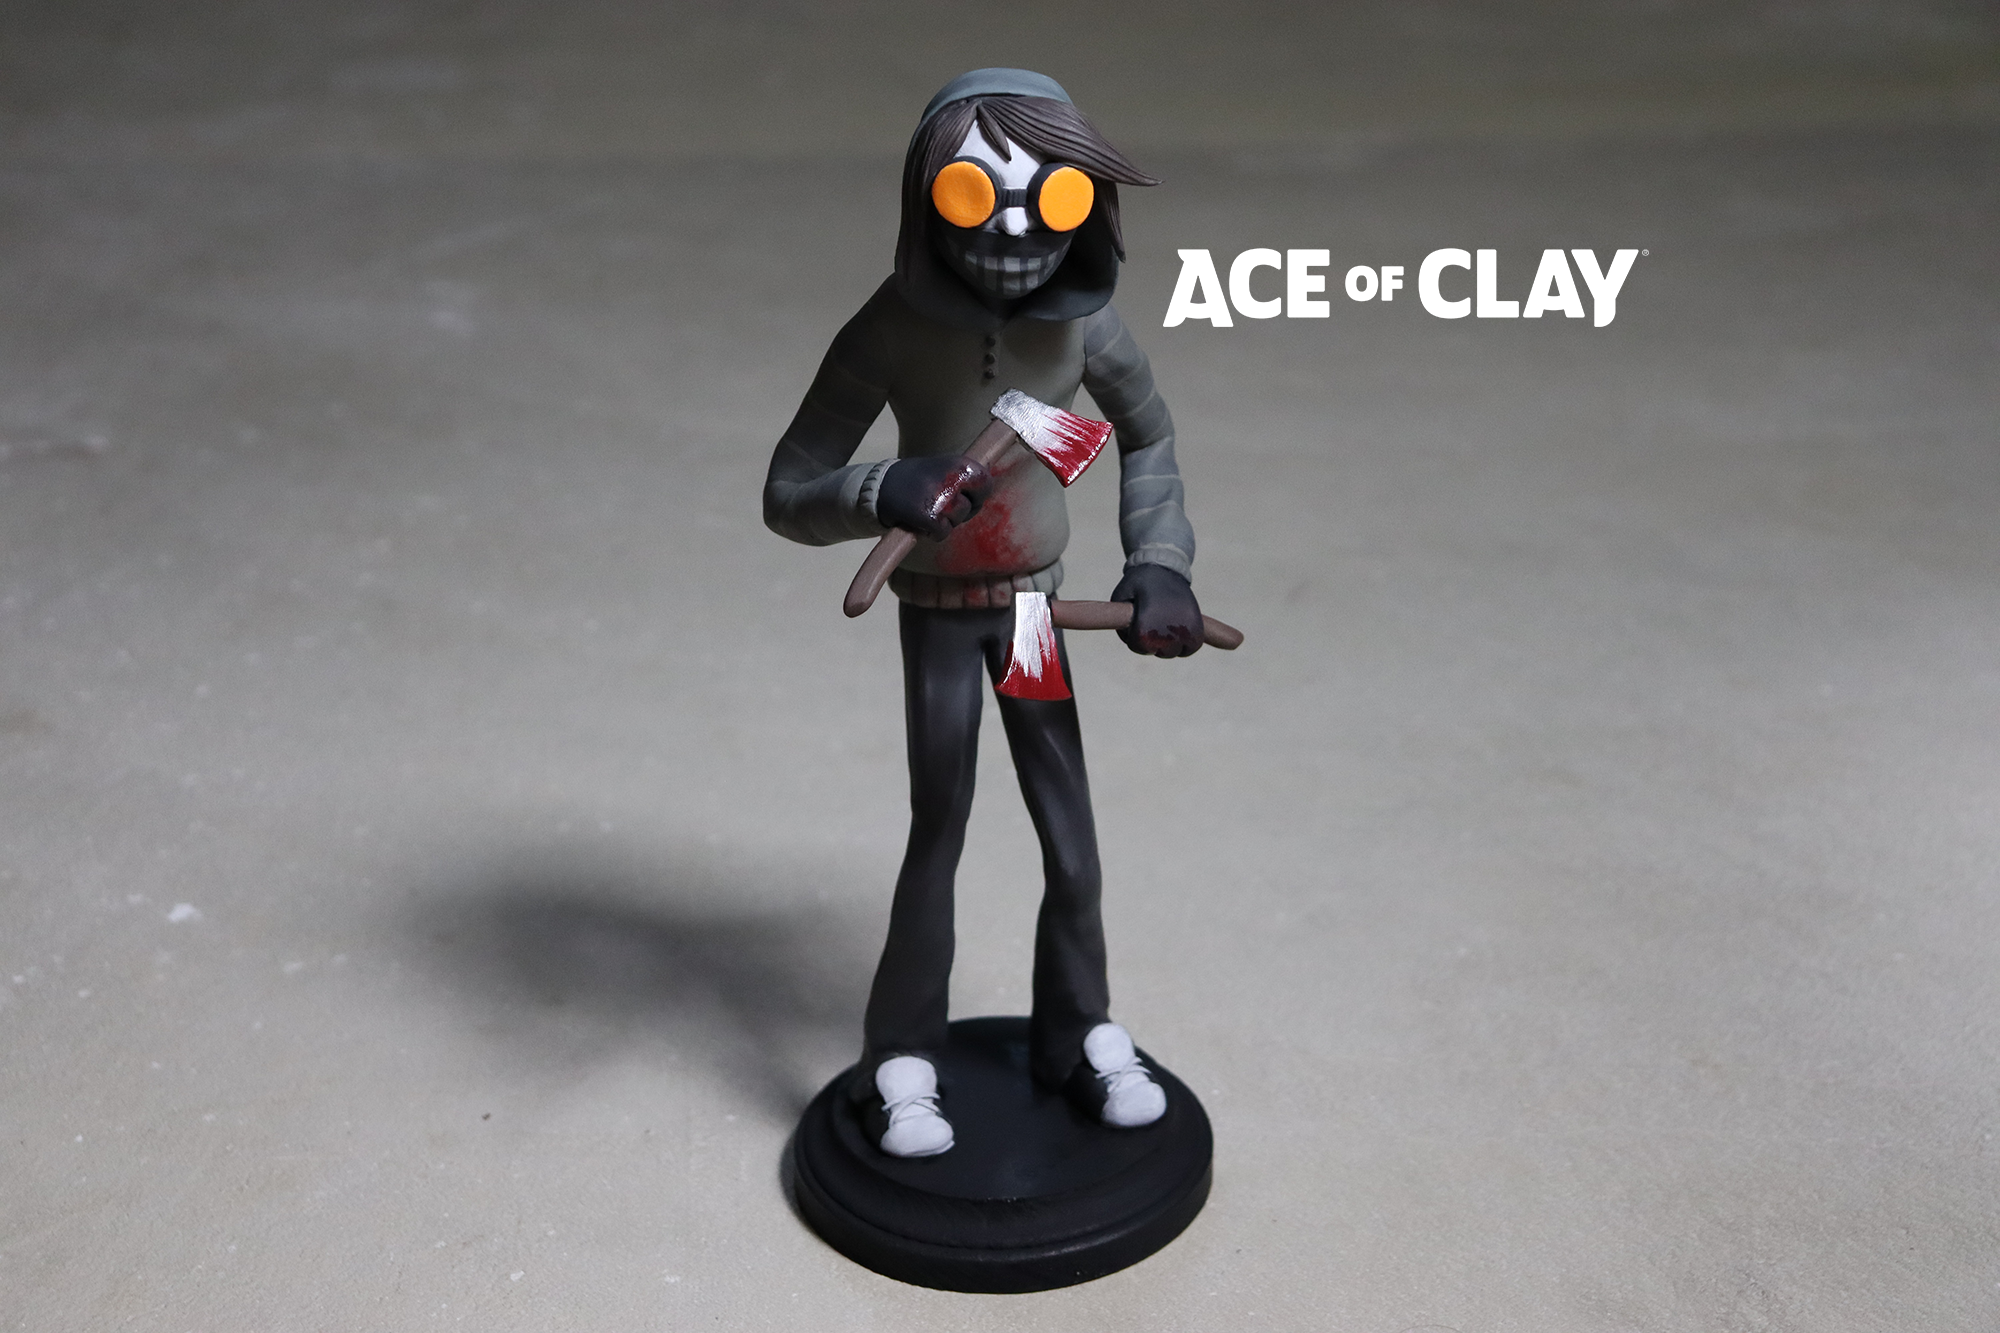 Ace of Clay on X: Who's your favorite #creepypasta sculpt so far